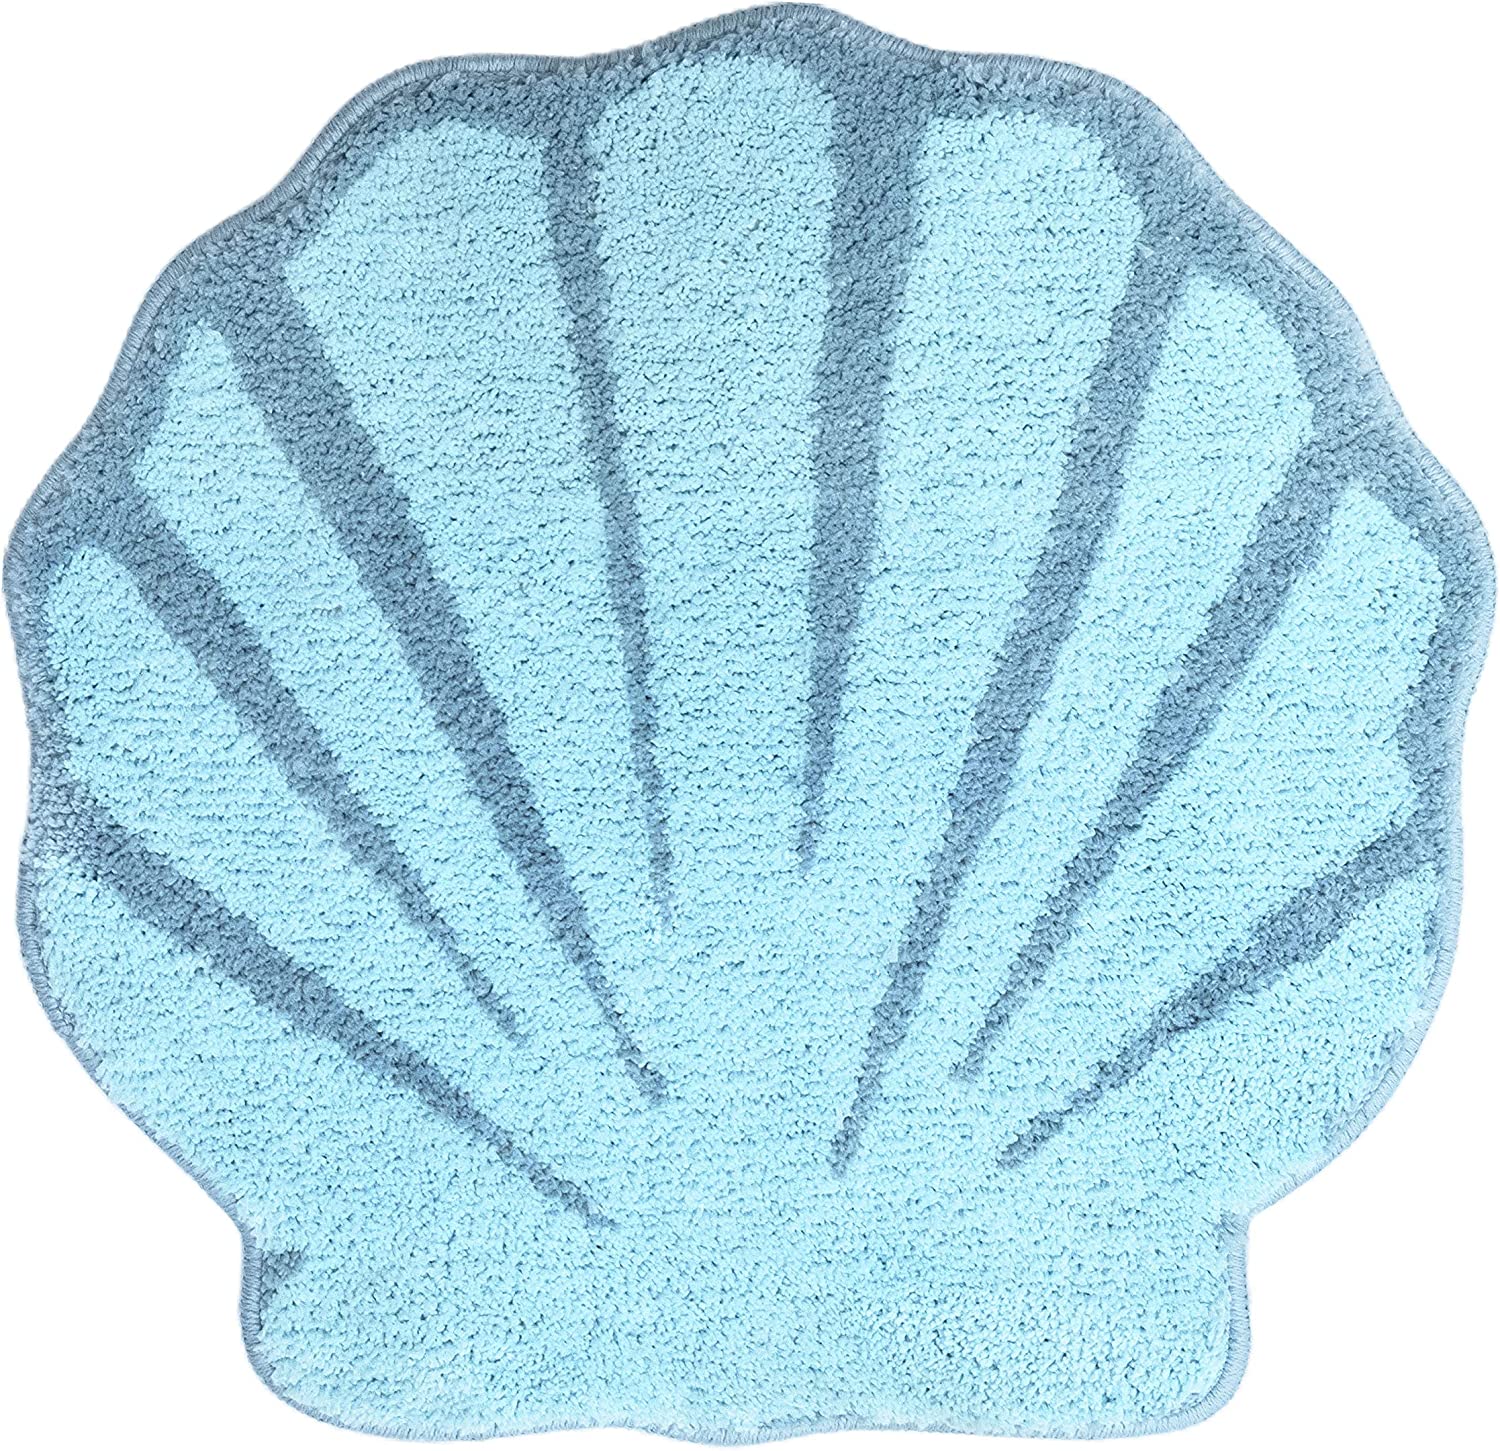 Blue Shell Bath Mat, Beach Ocean Style Rug for Bathroom